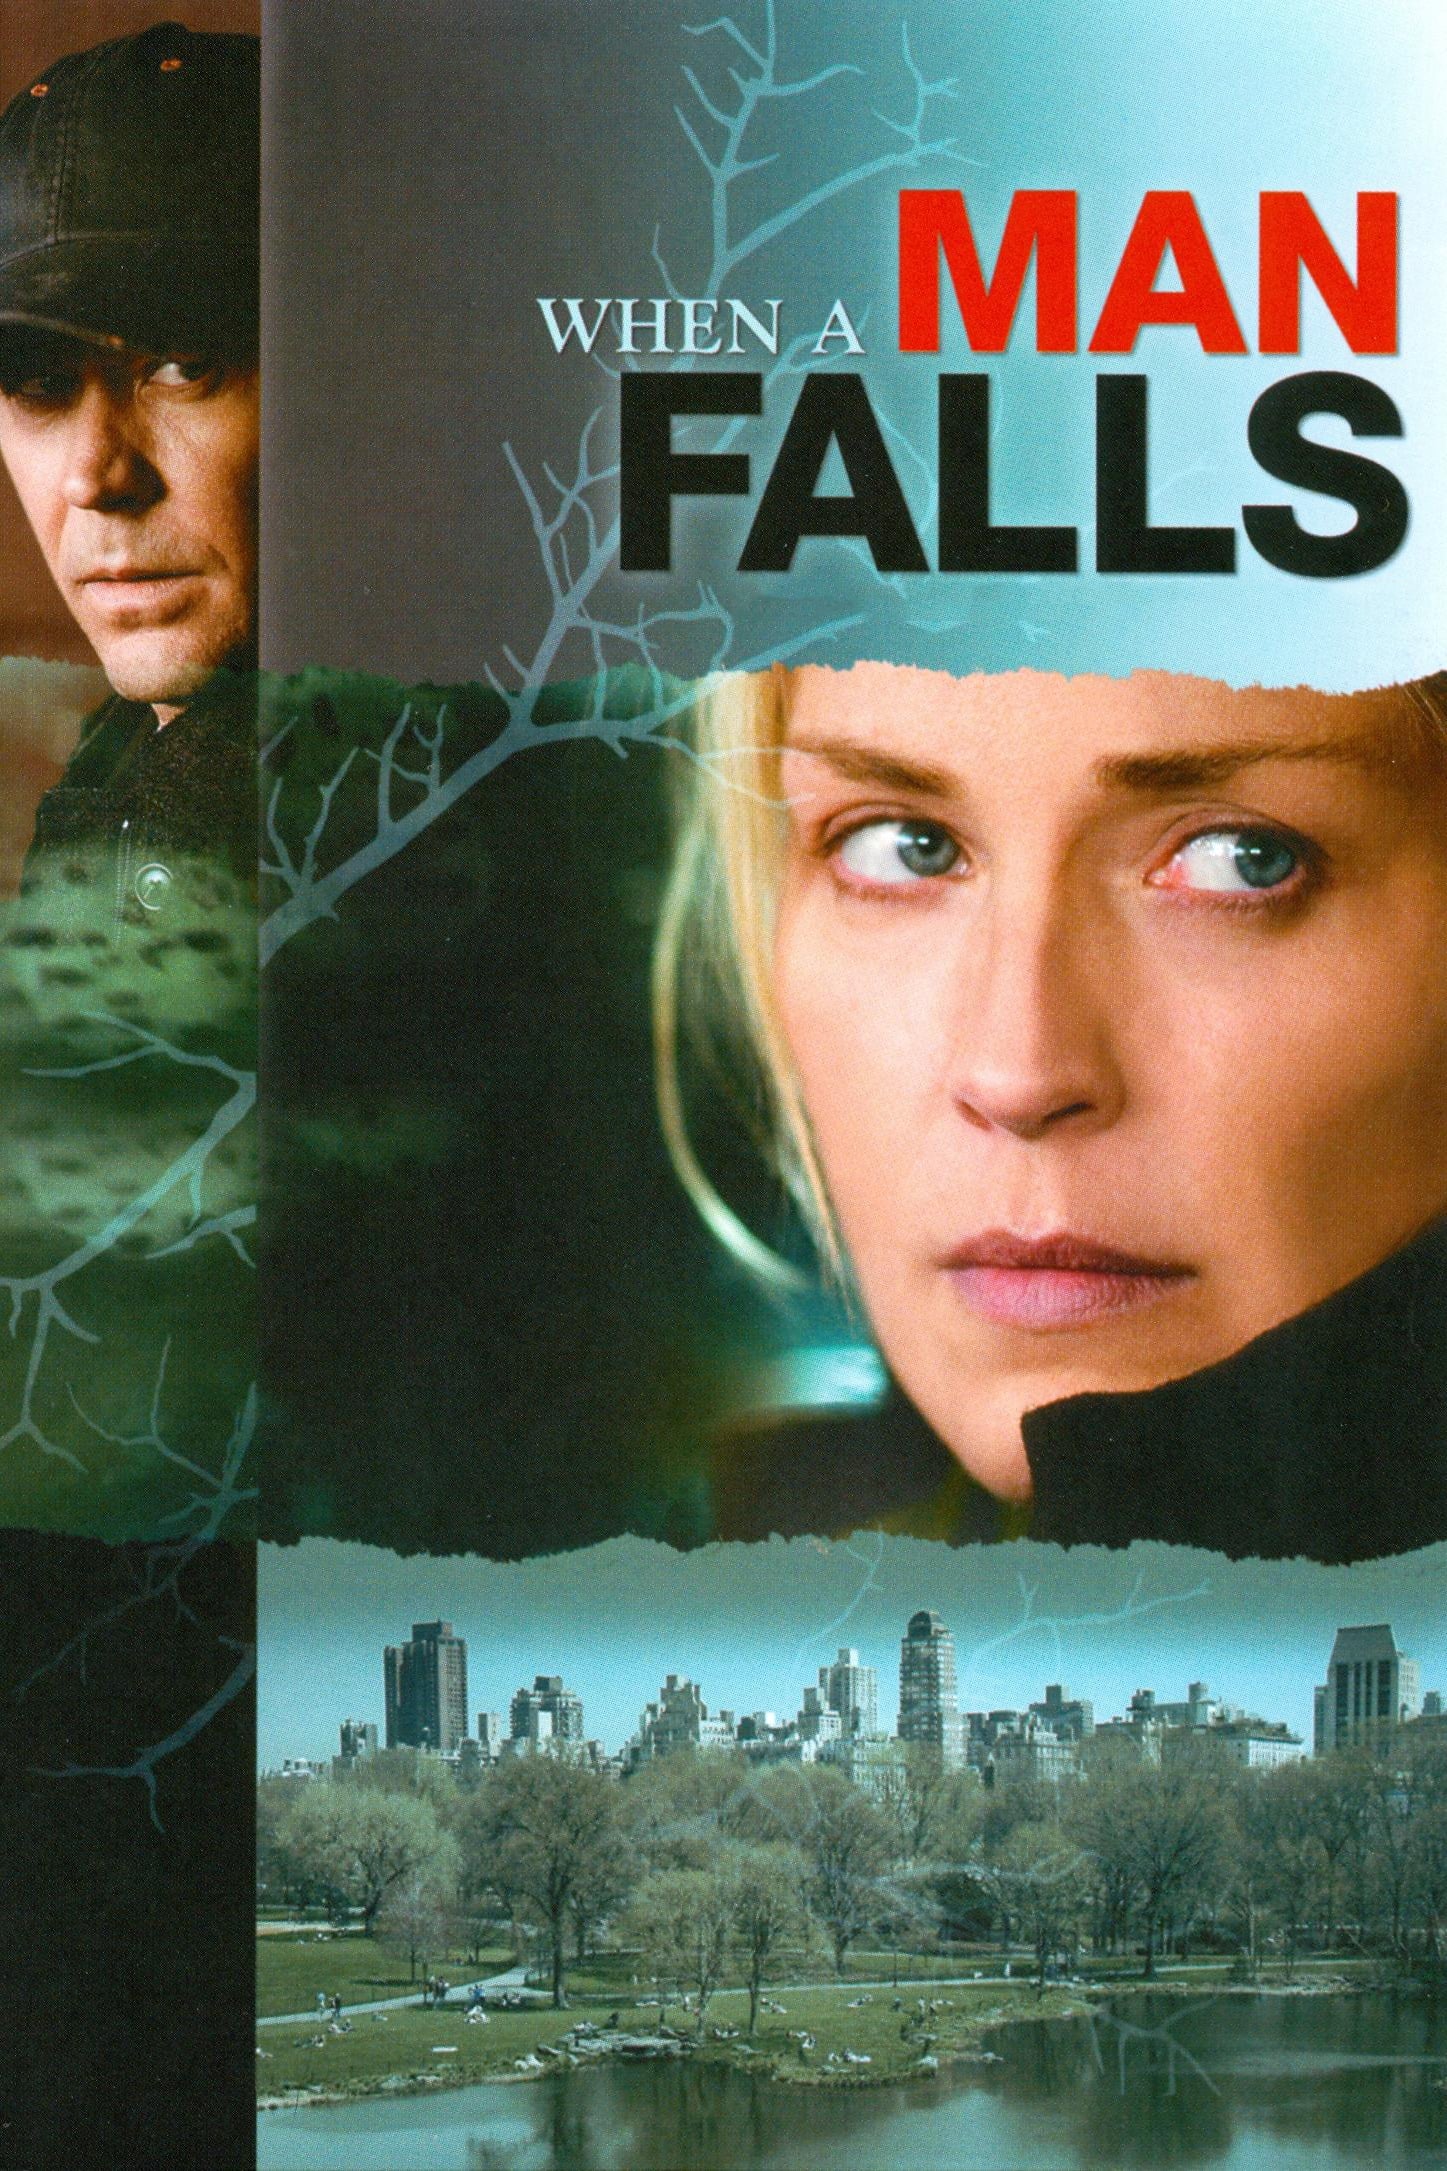 When a Man Falls (2007)